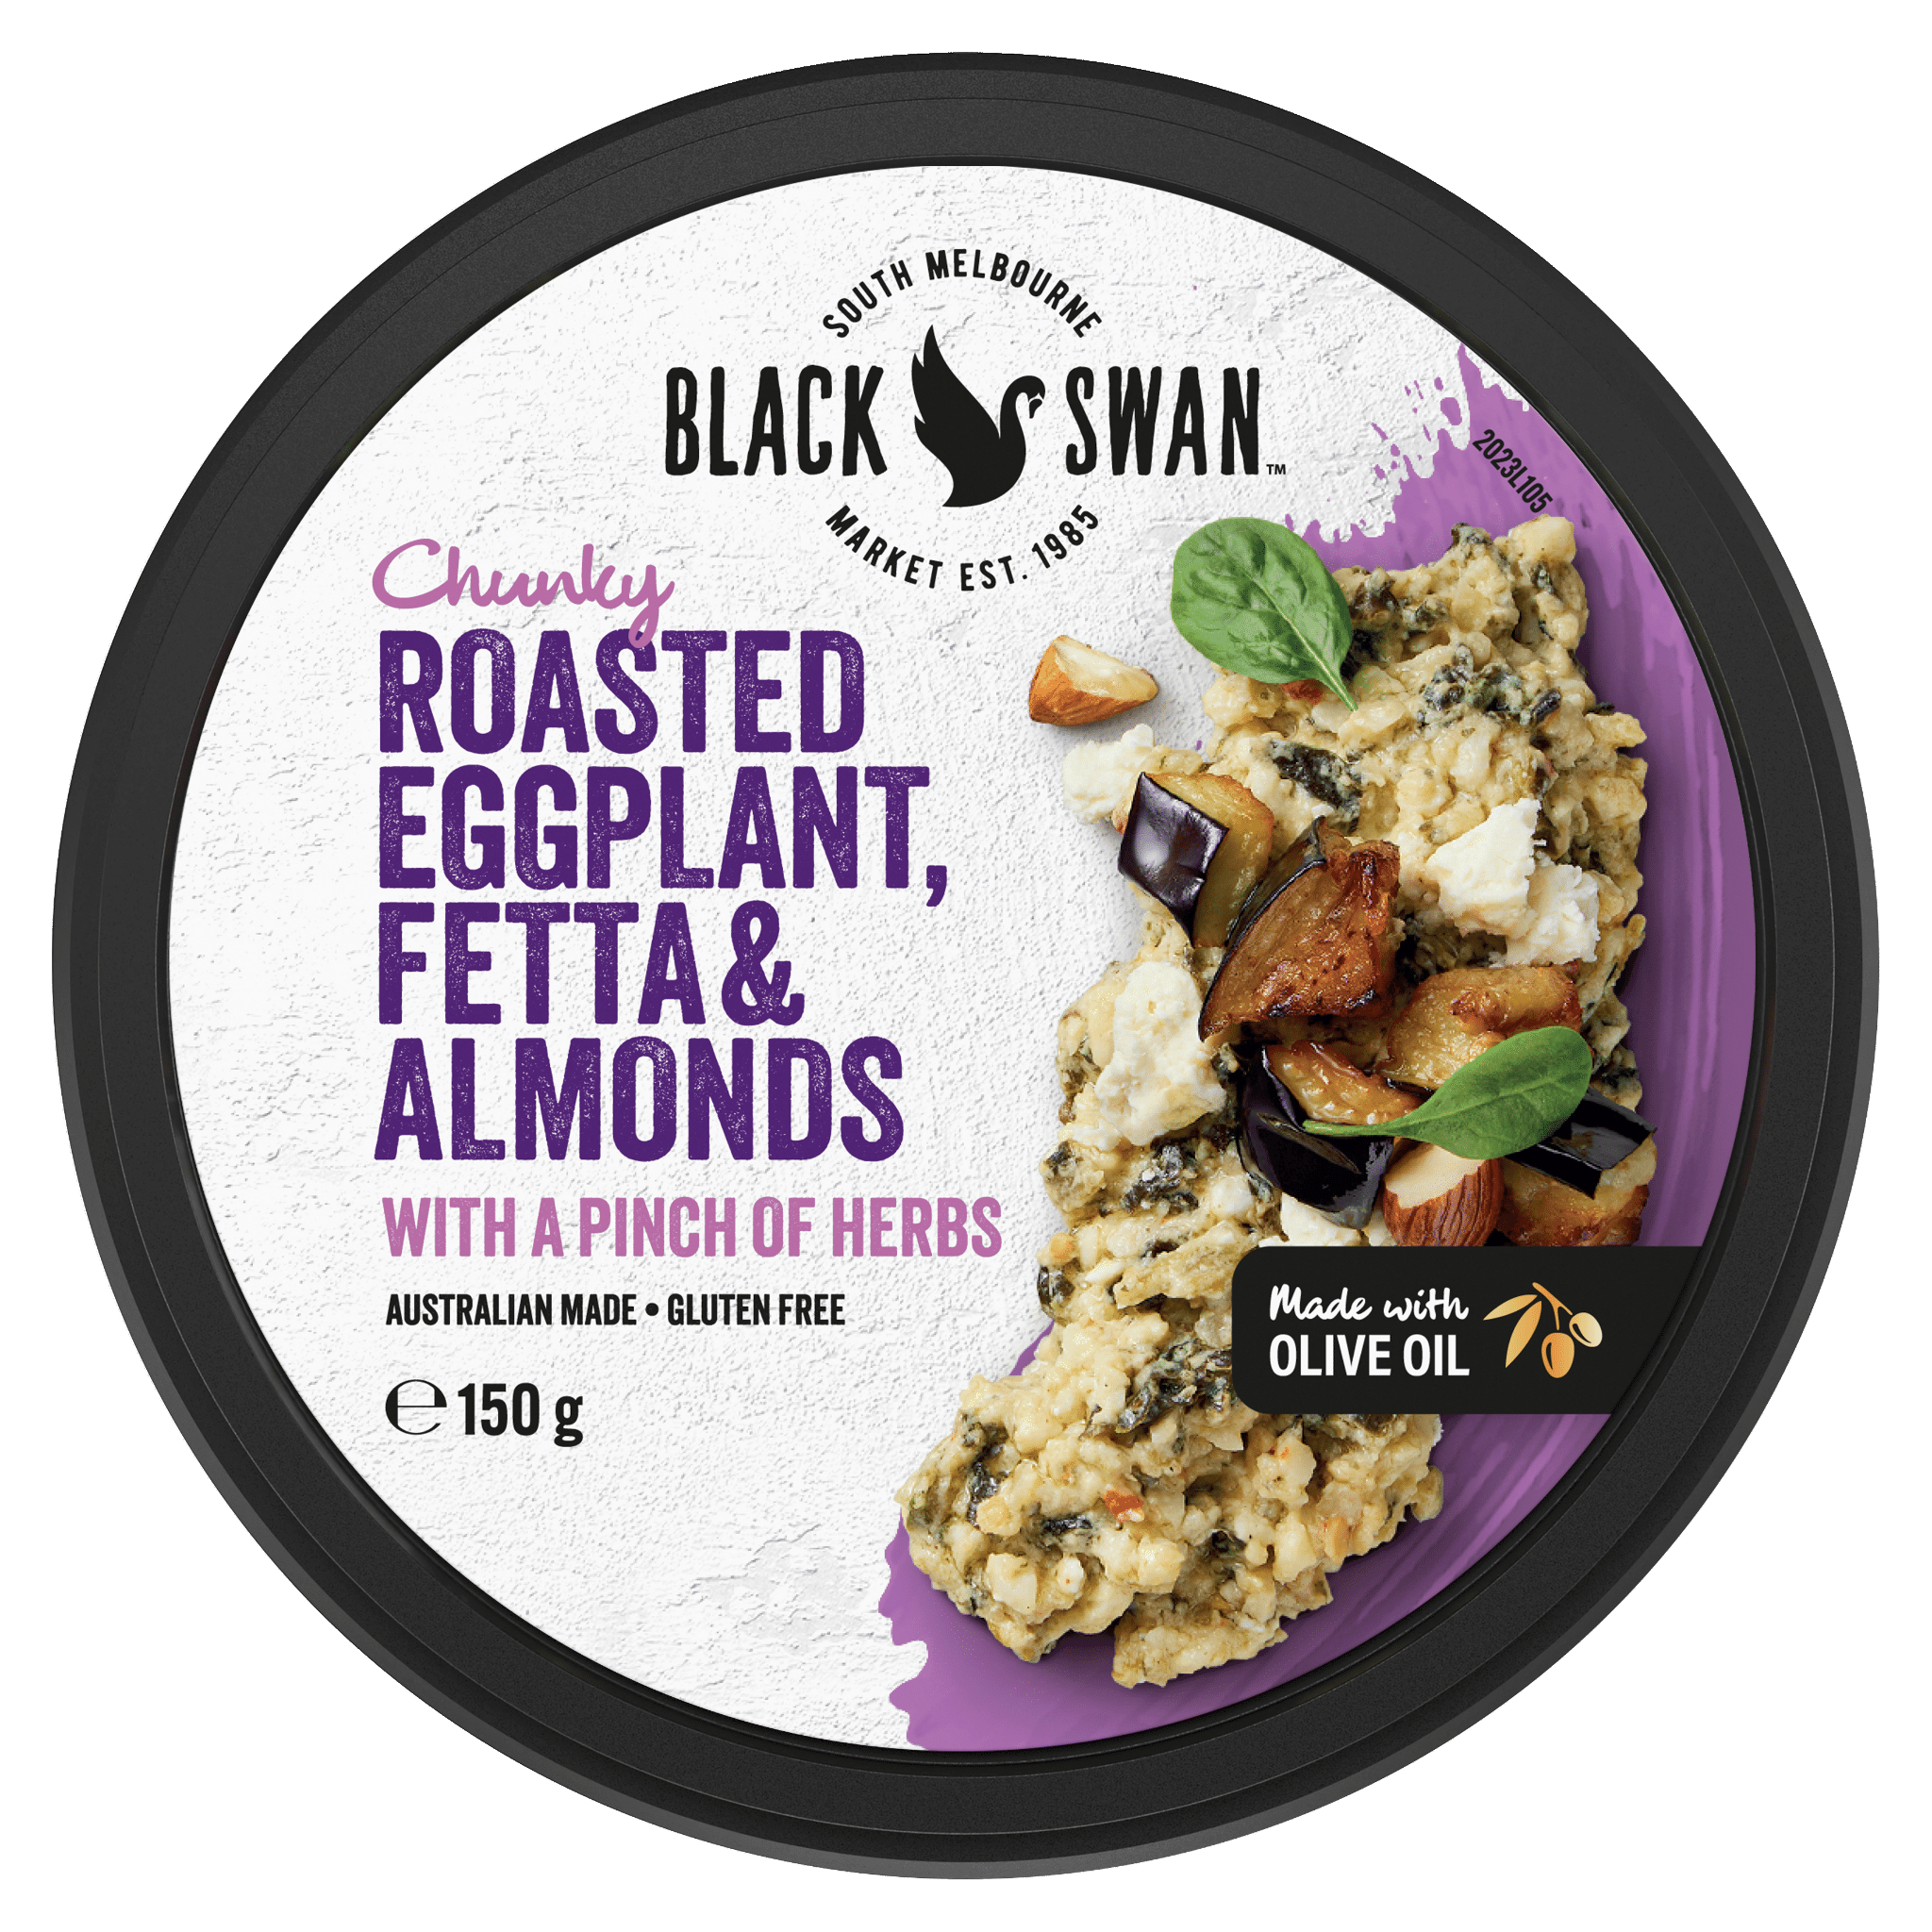 Roasted Eggplant, Fetta & Almonds